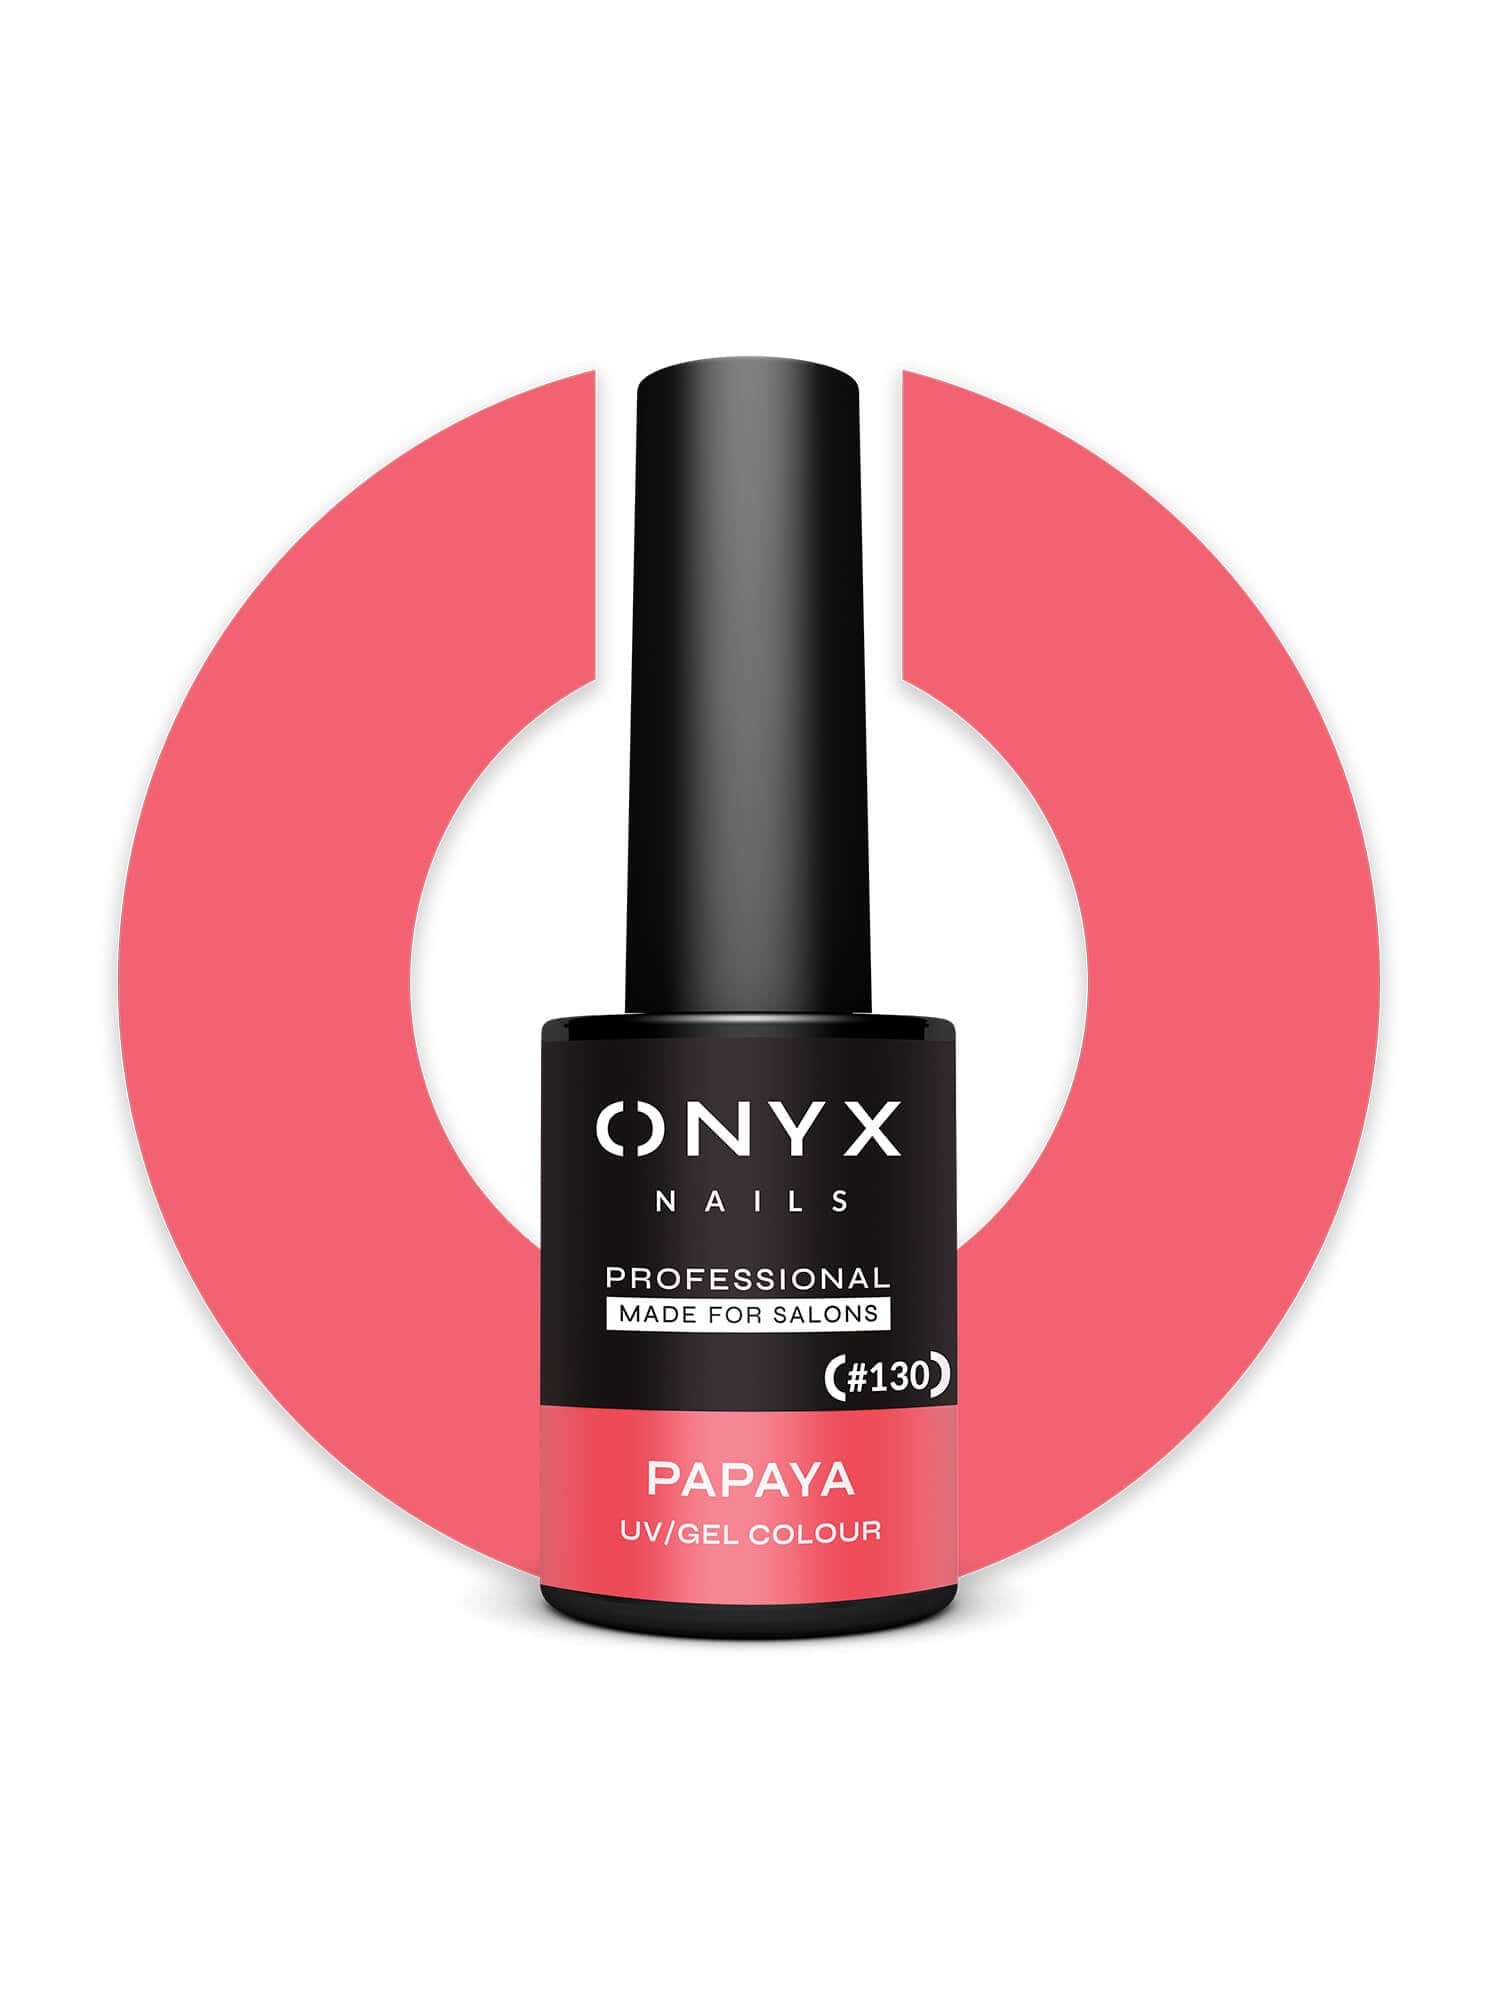 Onyx Nails Ημιμόνιμο βερνίκι 130 Papaya 7 ml